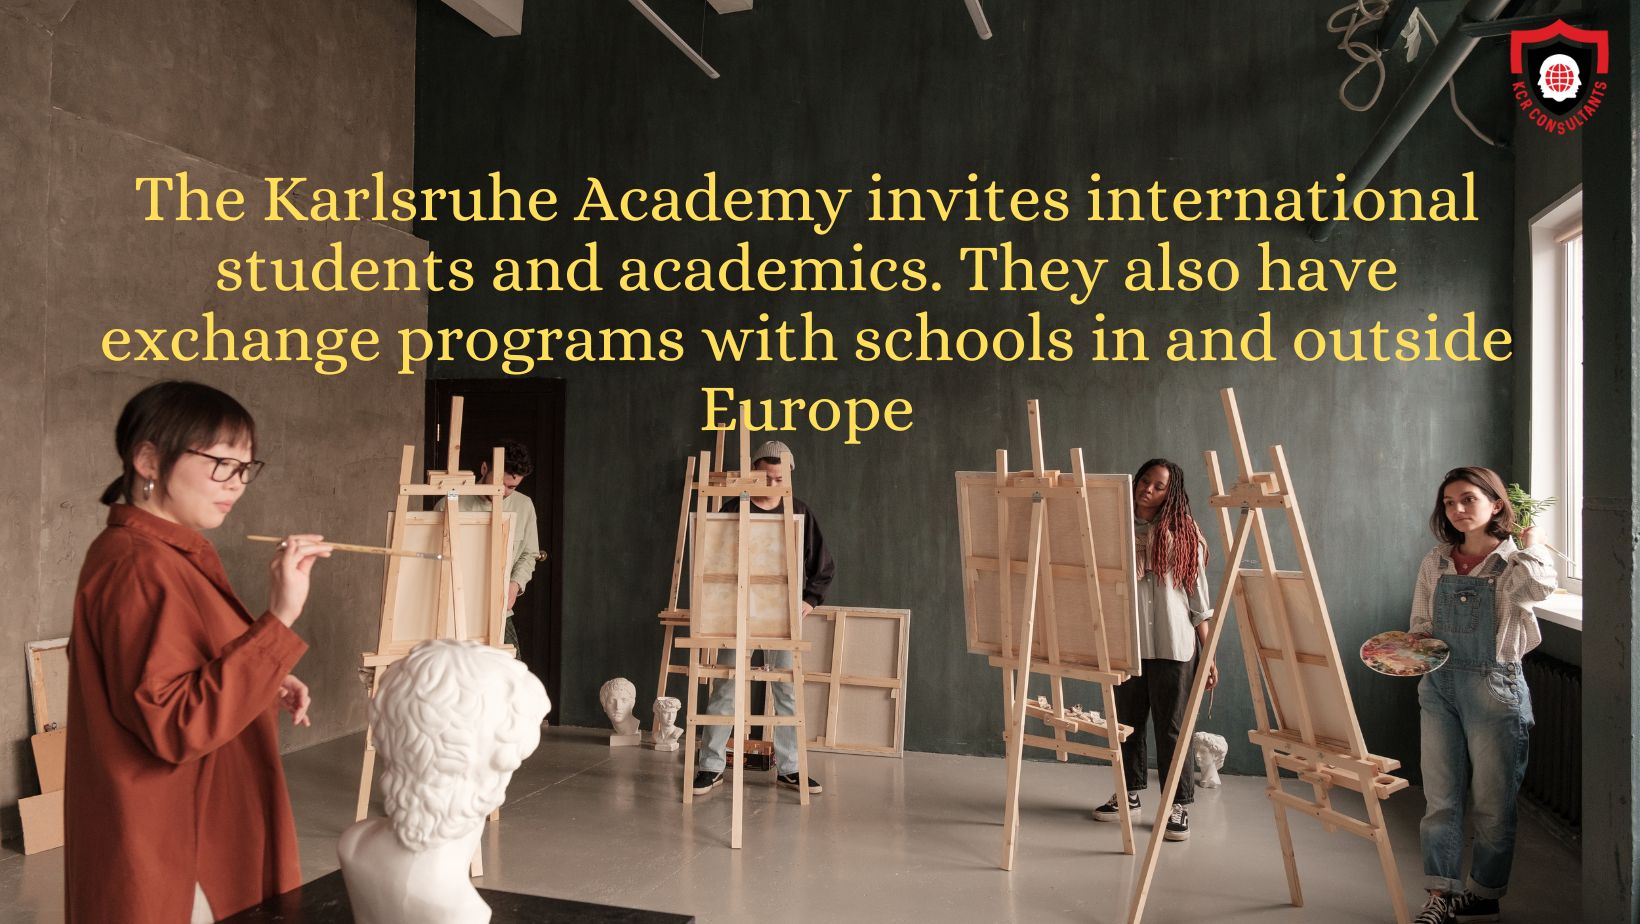 STATE ACADEMY OF FINE ARTS KARLSRUHE - KCR CONSULTANTS - internationalisation & students exchange programs